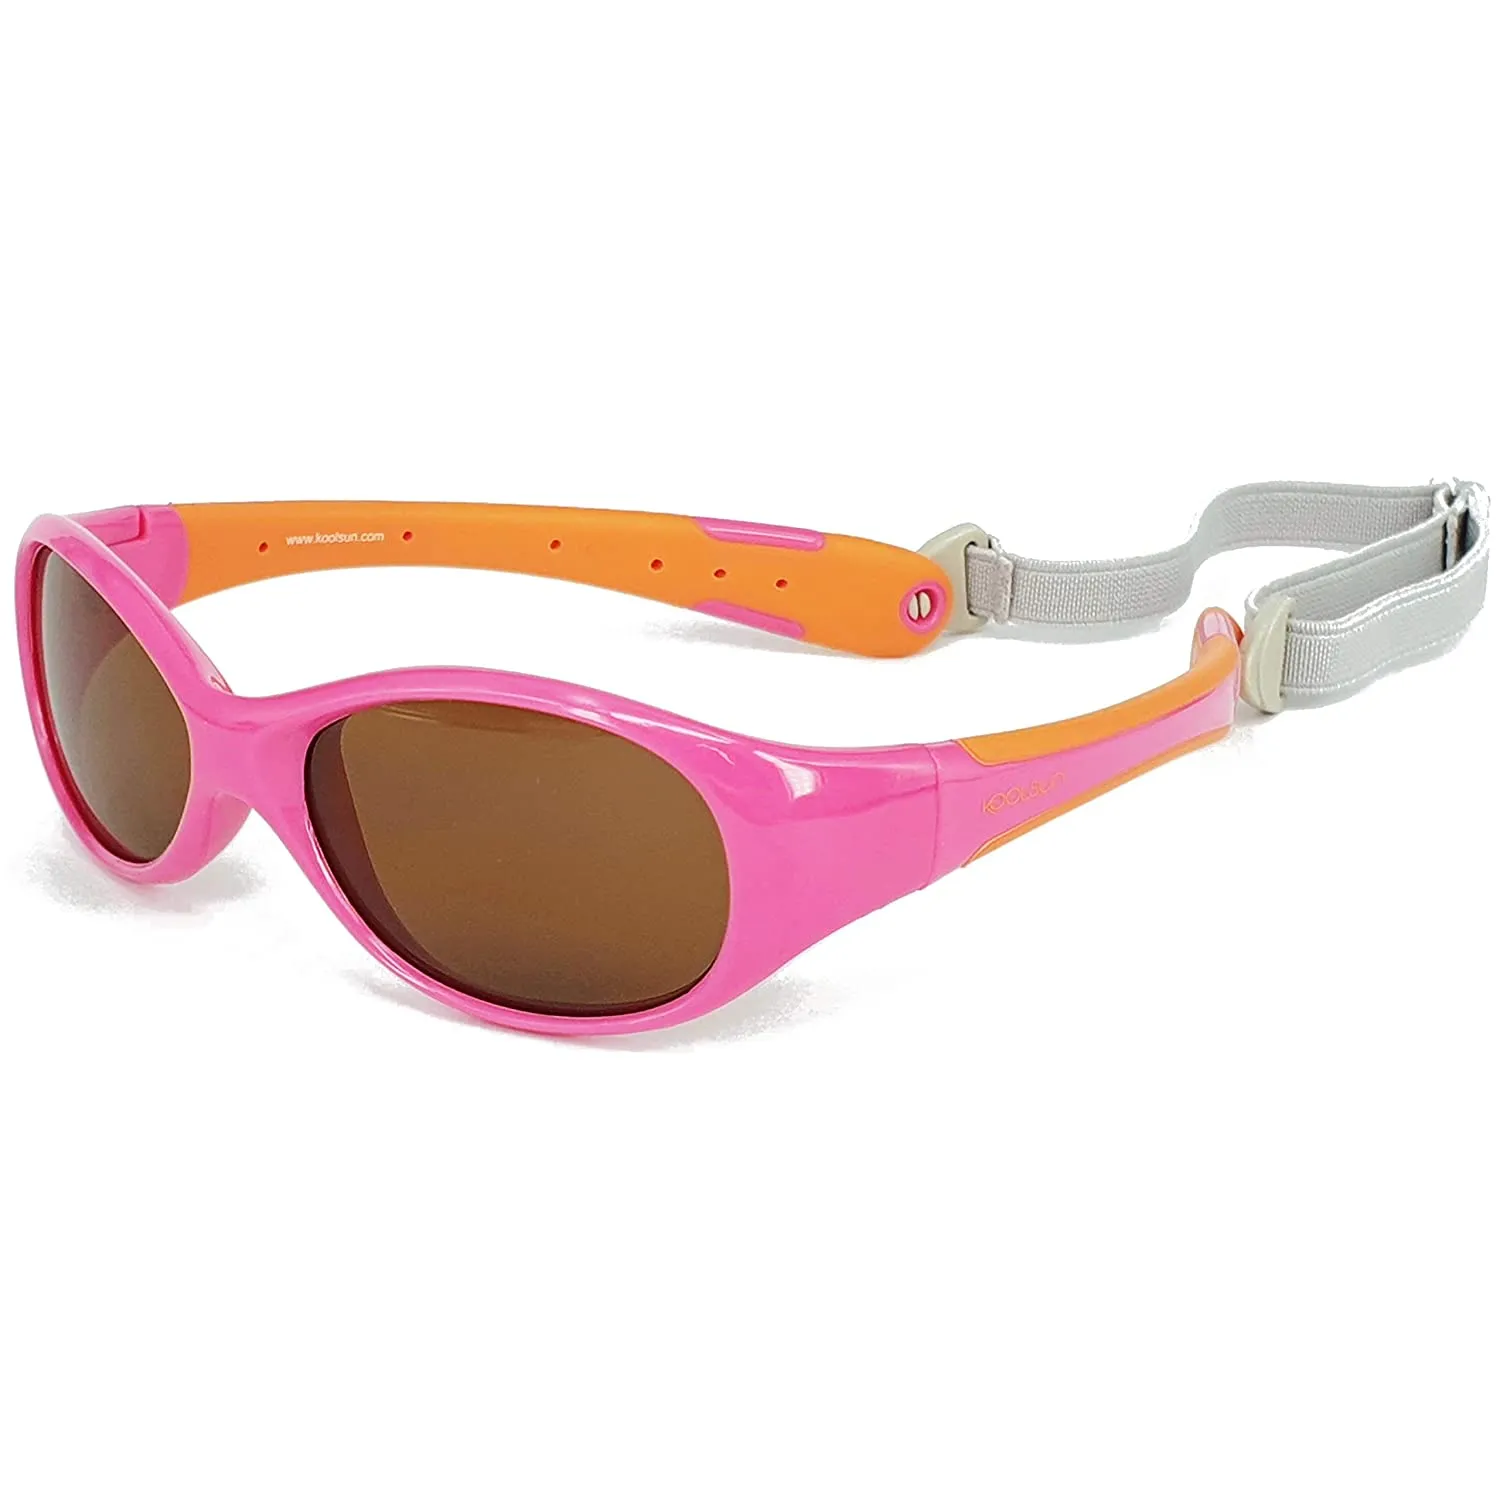 KOOLSUN - Flex - Детски слънчеви очила,  100% UV, гъвкави, с ластик